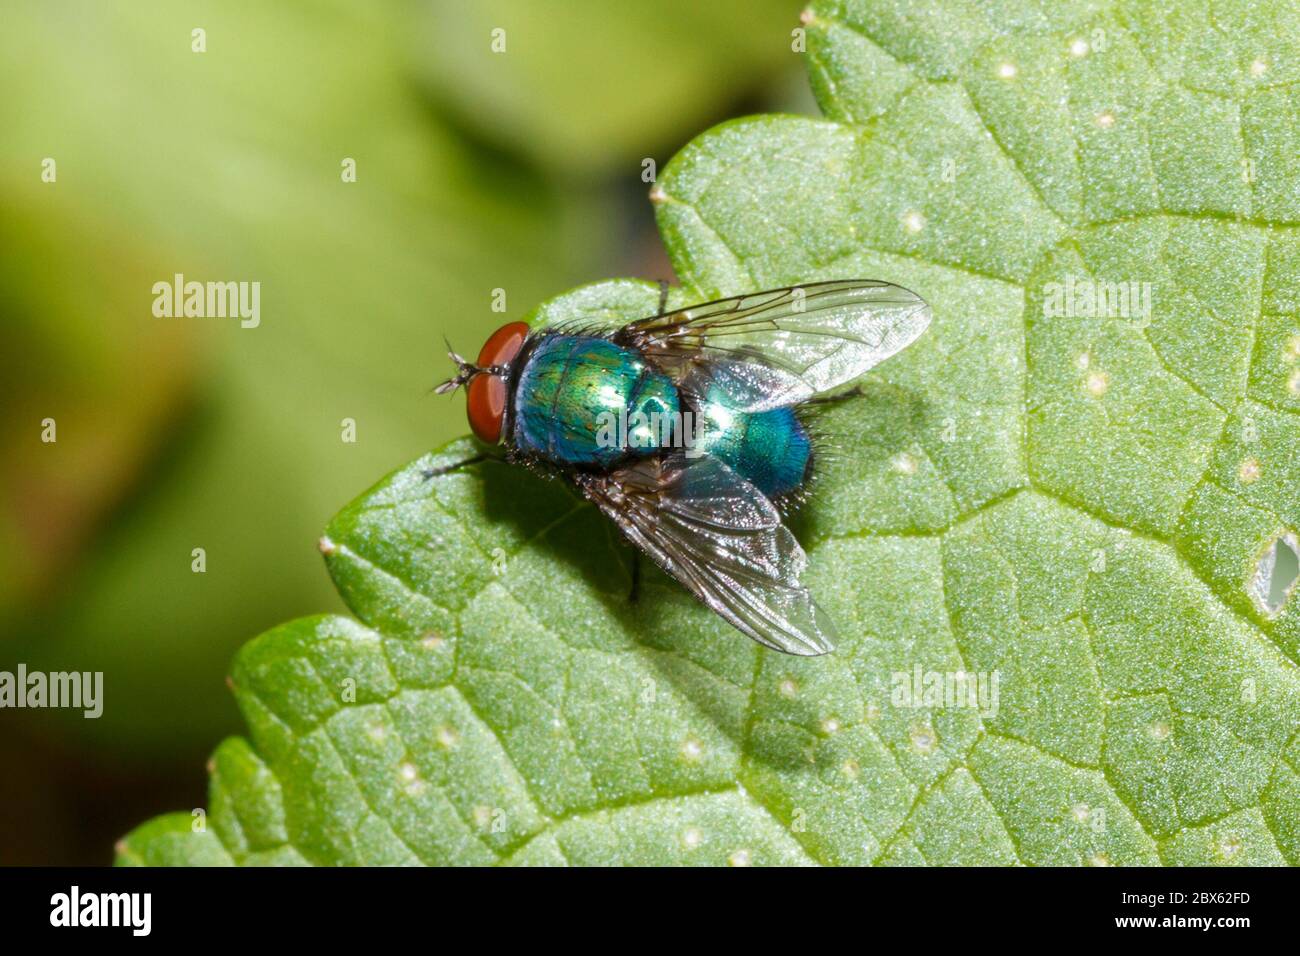 Blowfly (Lucilia species) Sussex, UK garden Stock Photo